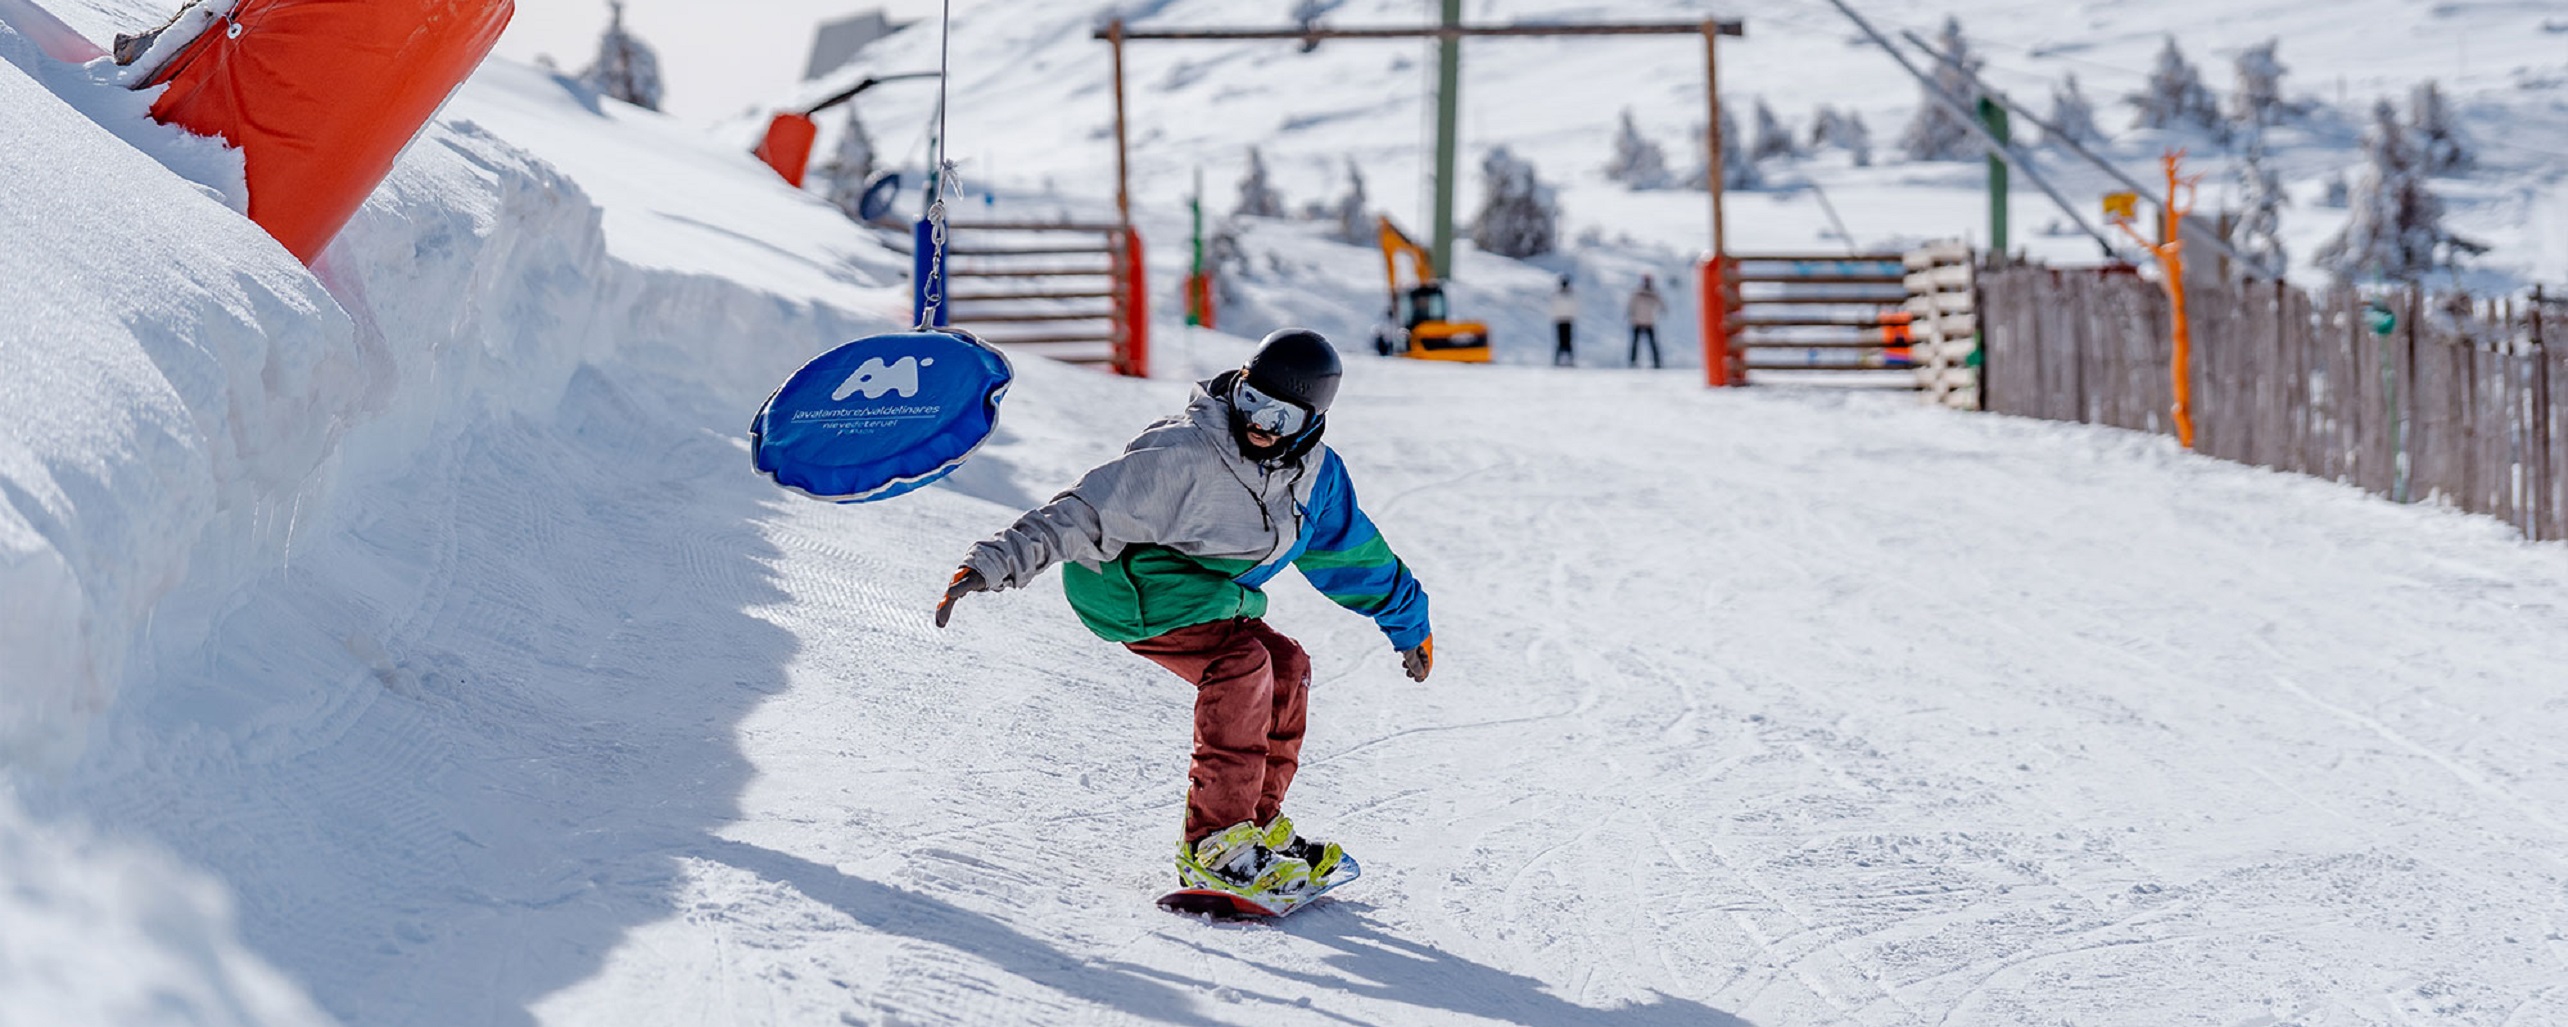 Snow & Fun | Aramón | Estación de esquí Javalambre-Valdelinares